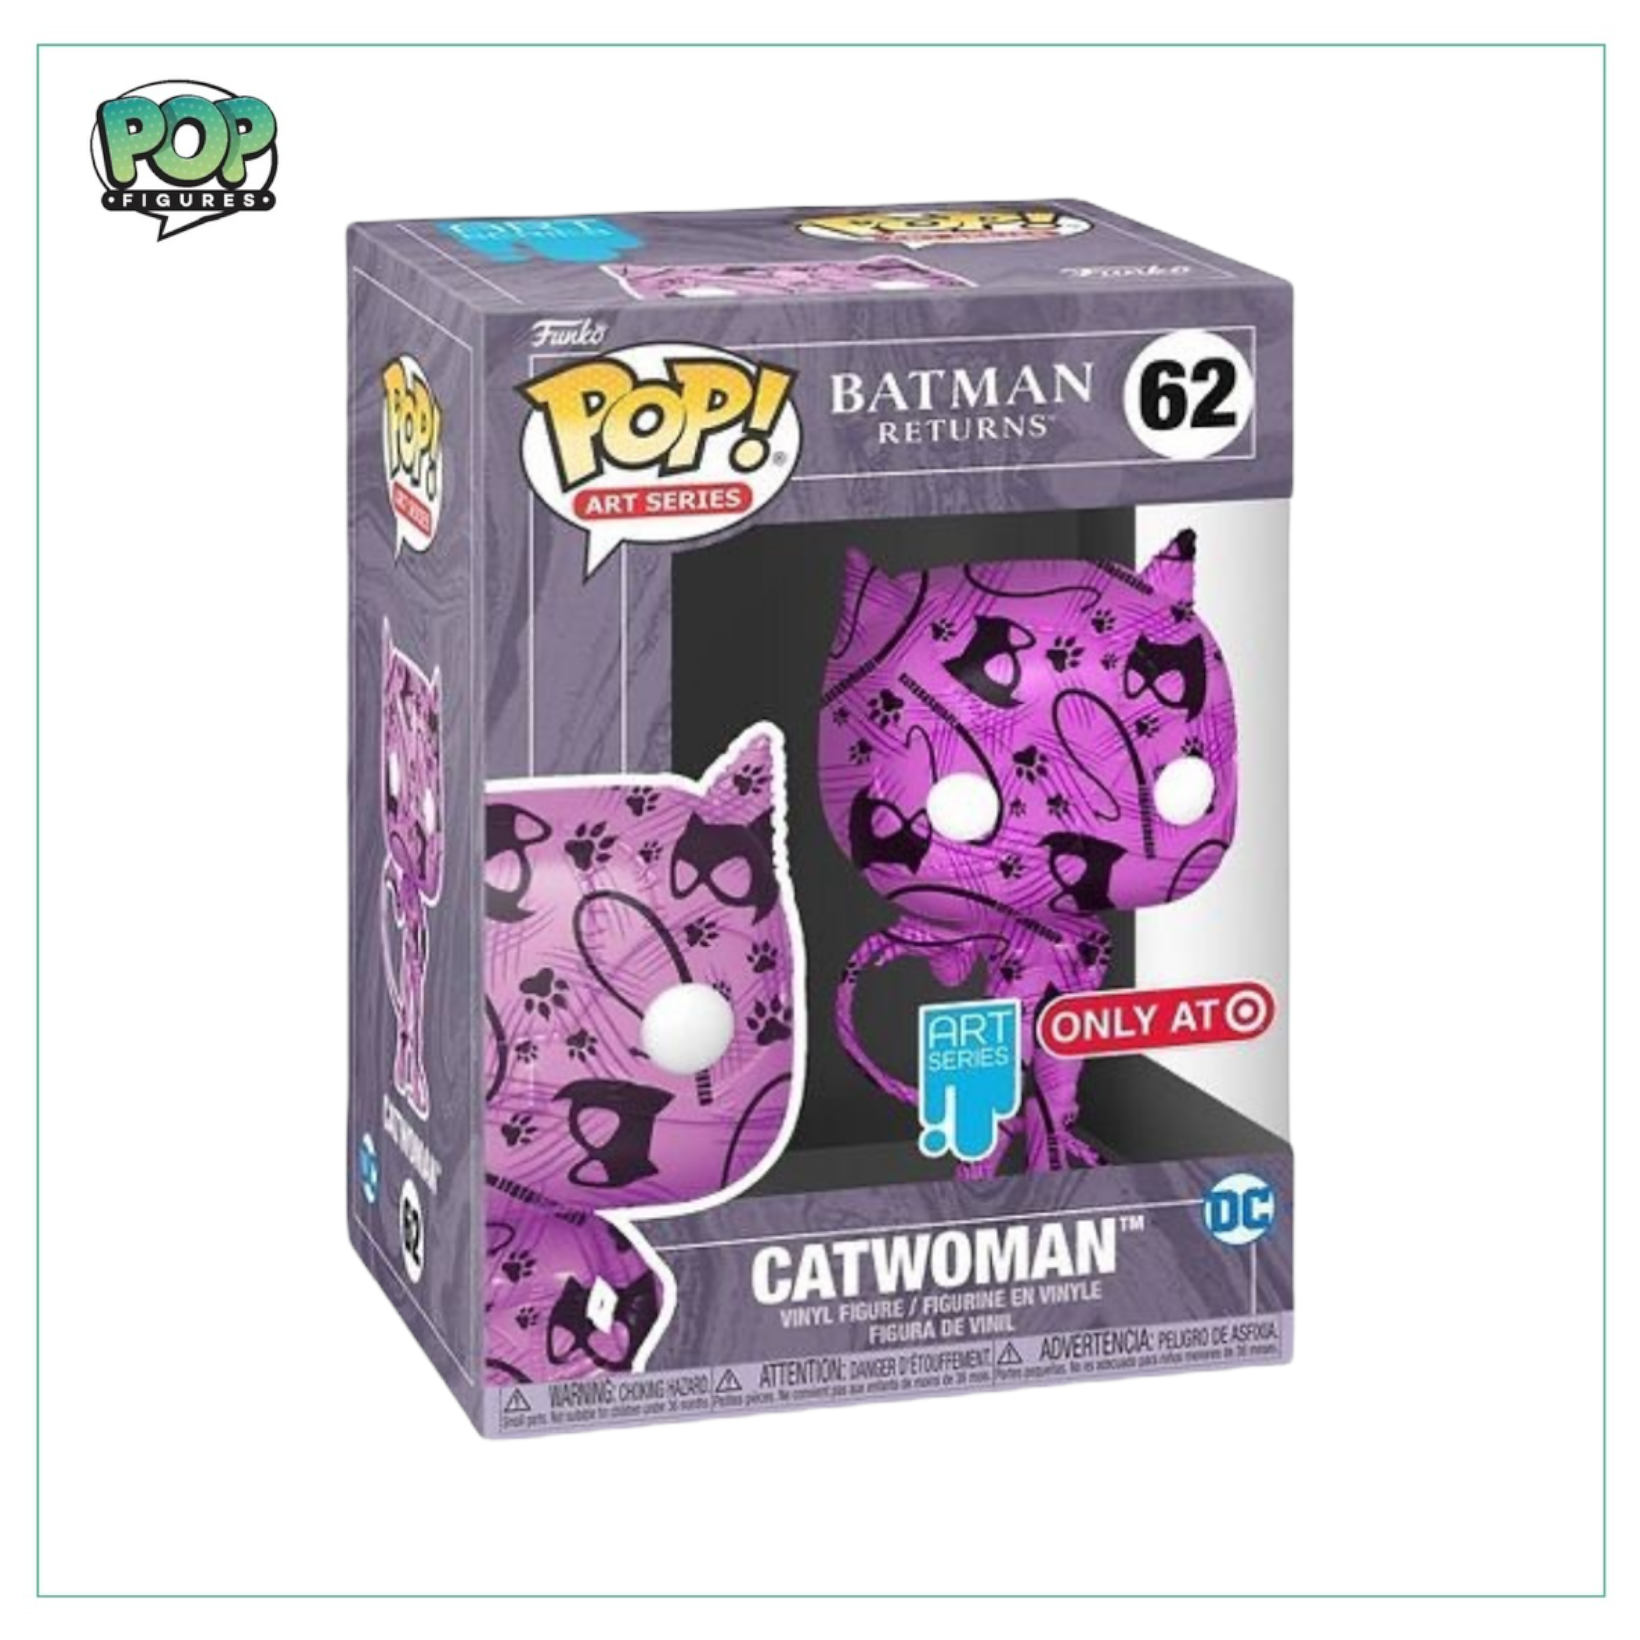 Catwoman (Art Series) #62 Funko Pop! - Batman Returns - DC - Target Exclusive